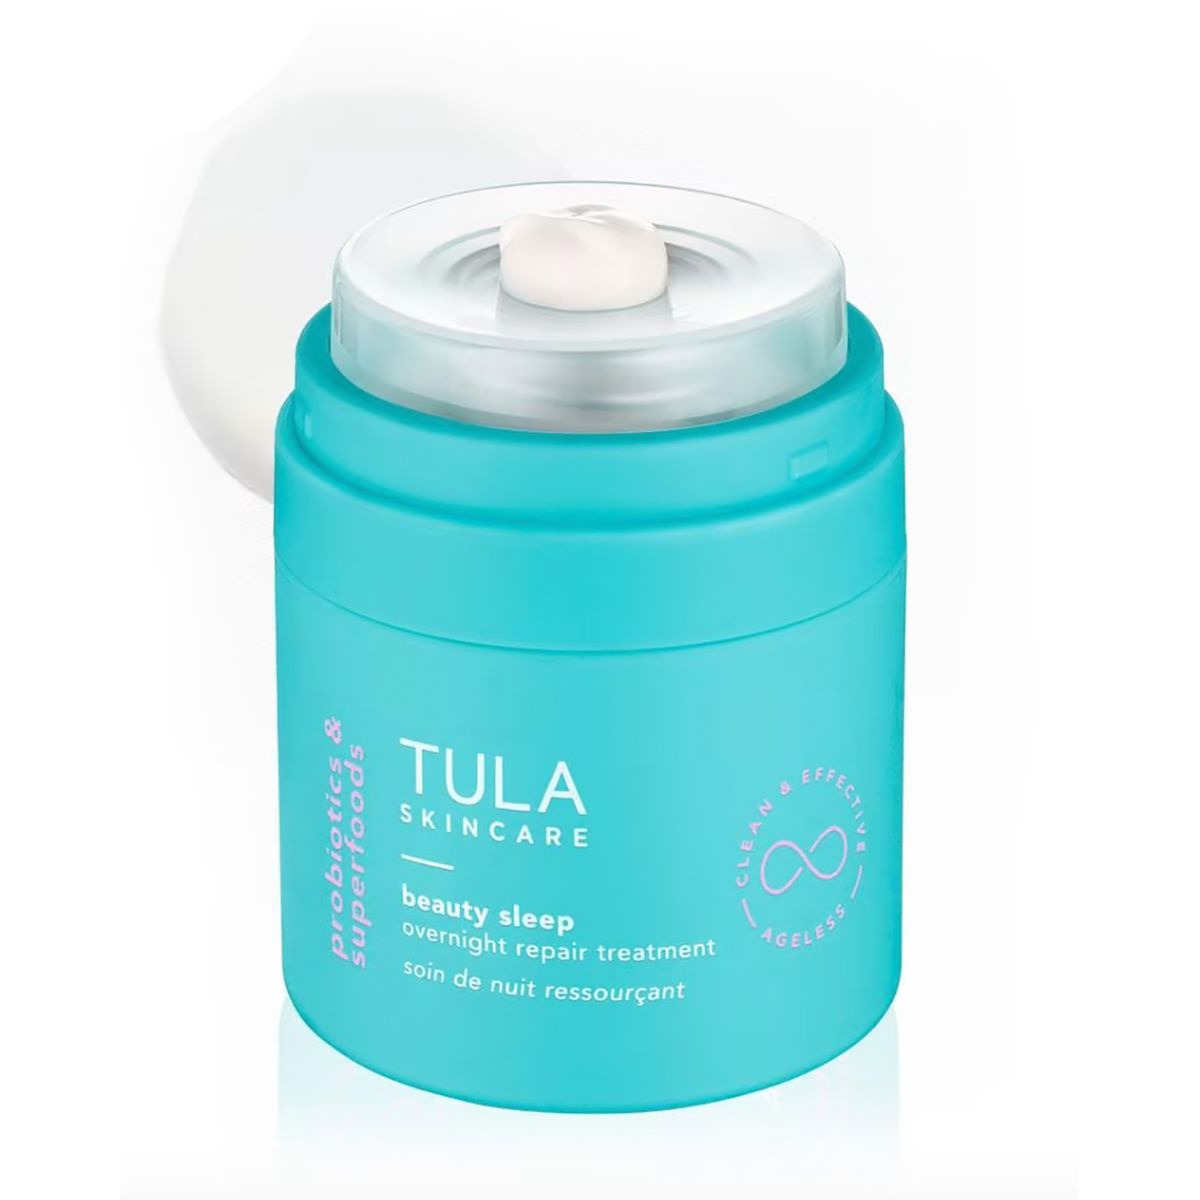 Tula’s Overnight Repair Treatment